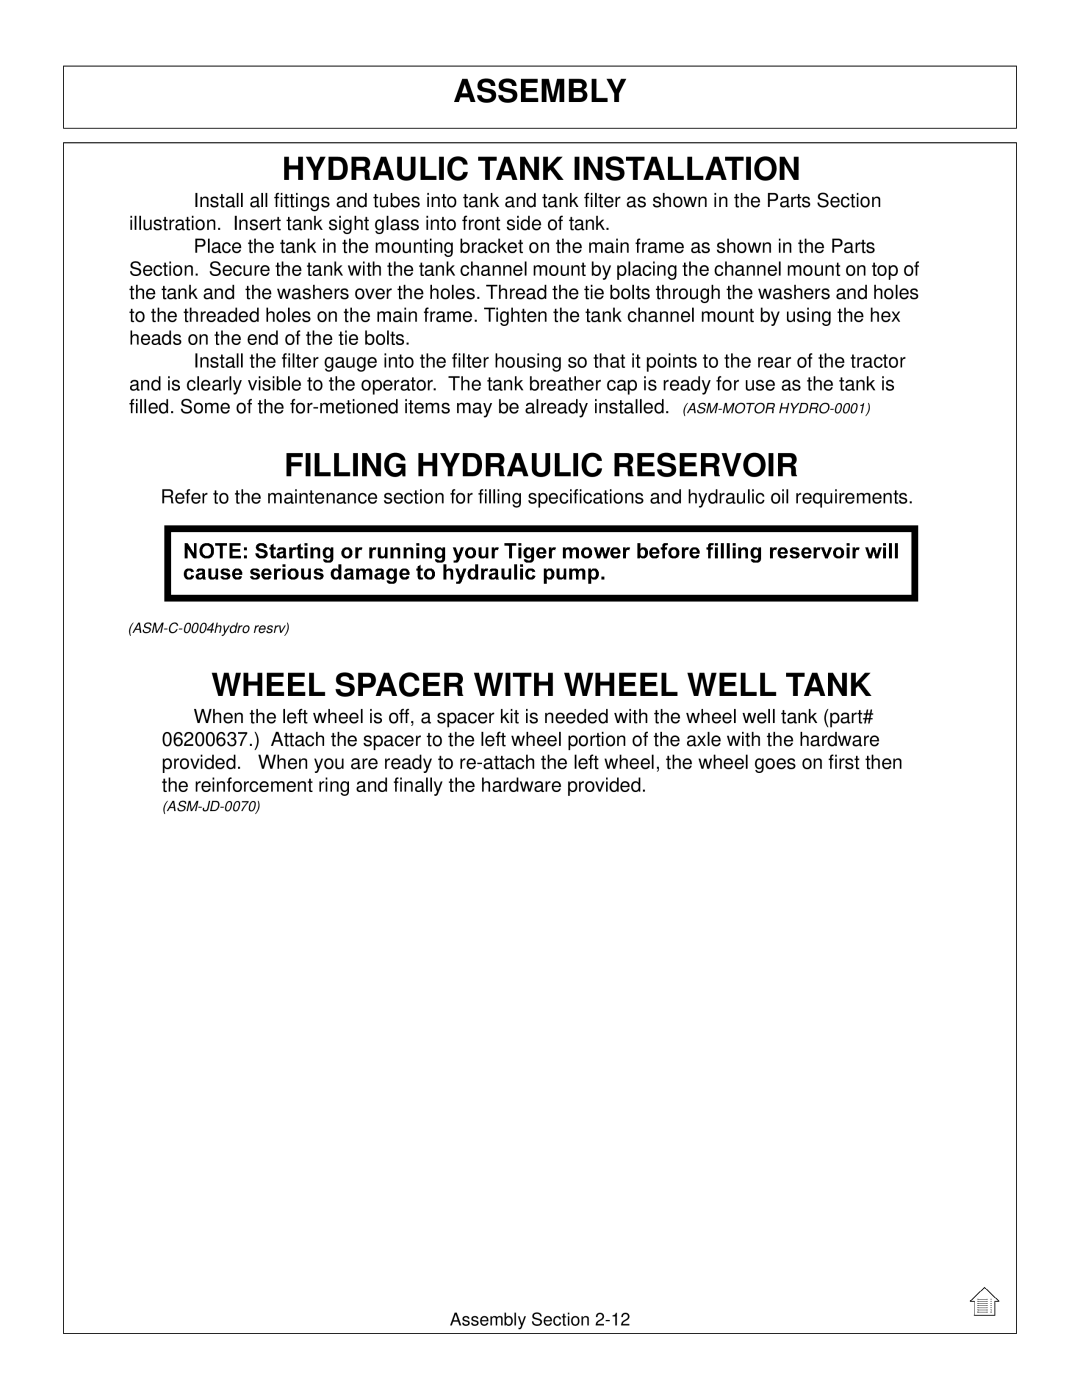 Tiger Products Co., Ltd 5101E Assembly Hydraulic Tank Installation, Filling Hydraulic Reservoir, ASM-C-0004hydroresrv 